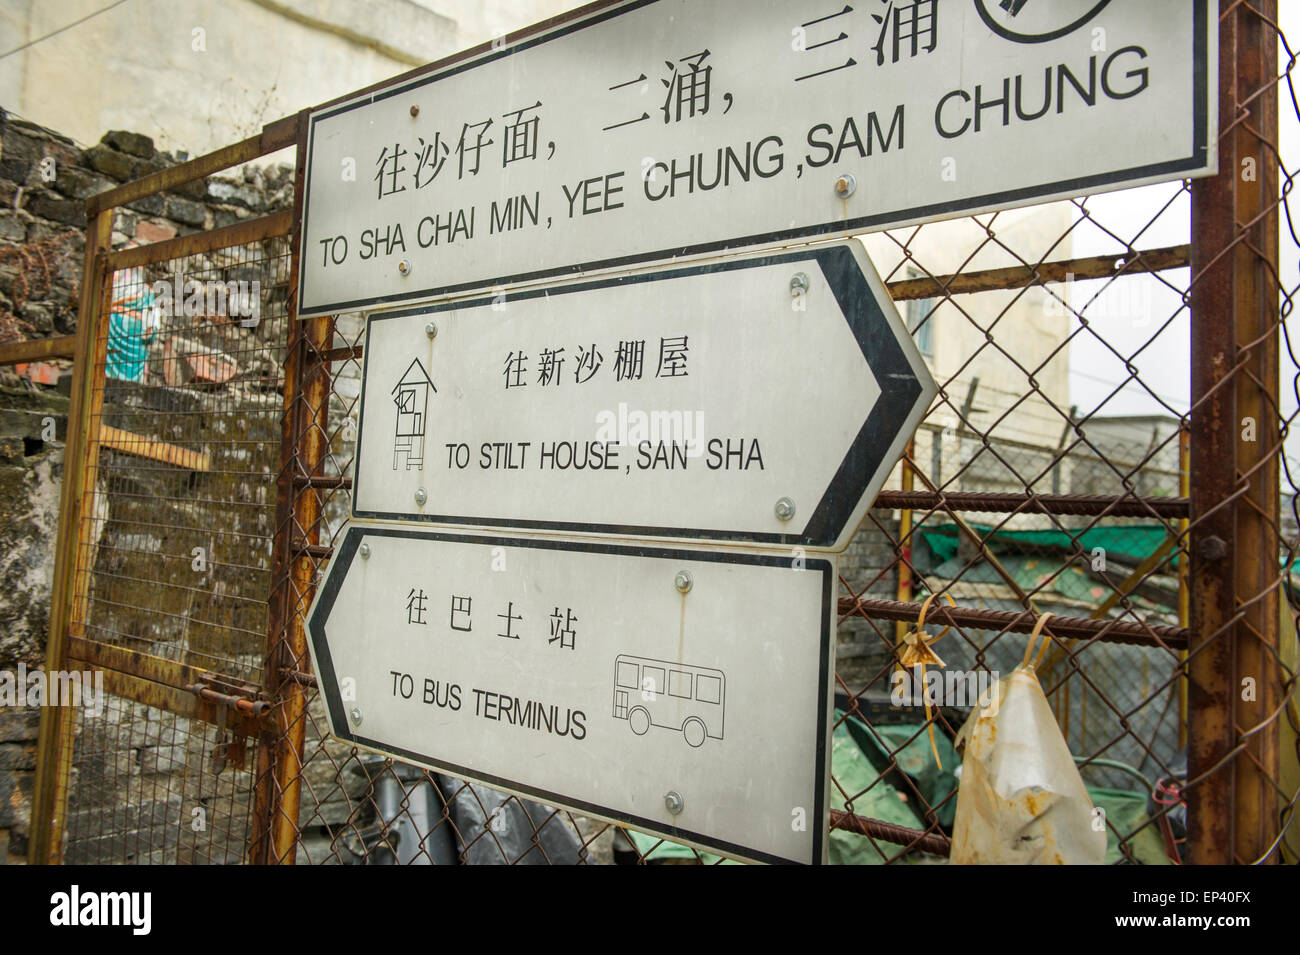 https://c8.alamy.com/comp/EP40FX/tai-o-fishing-village-directional-signs-lantau-island-hong-kong-china-EP40FX.jpg